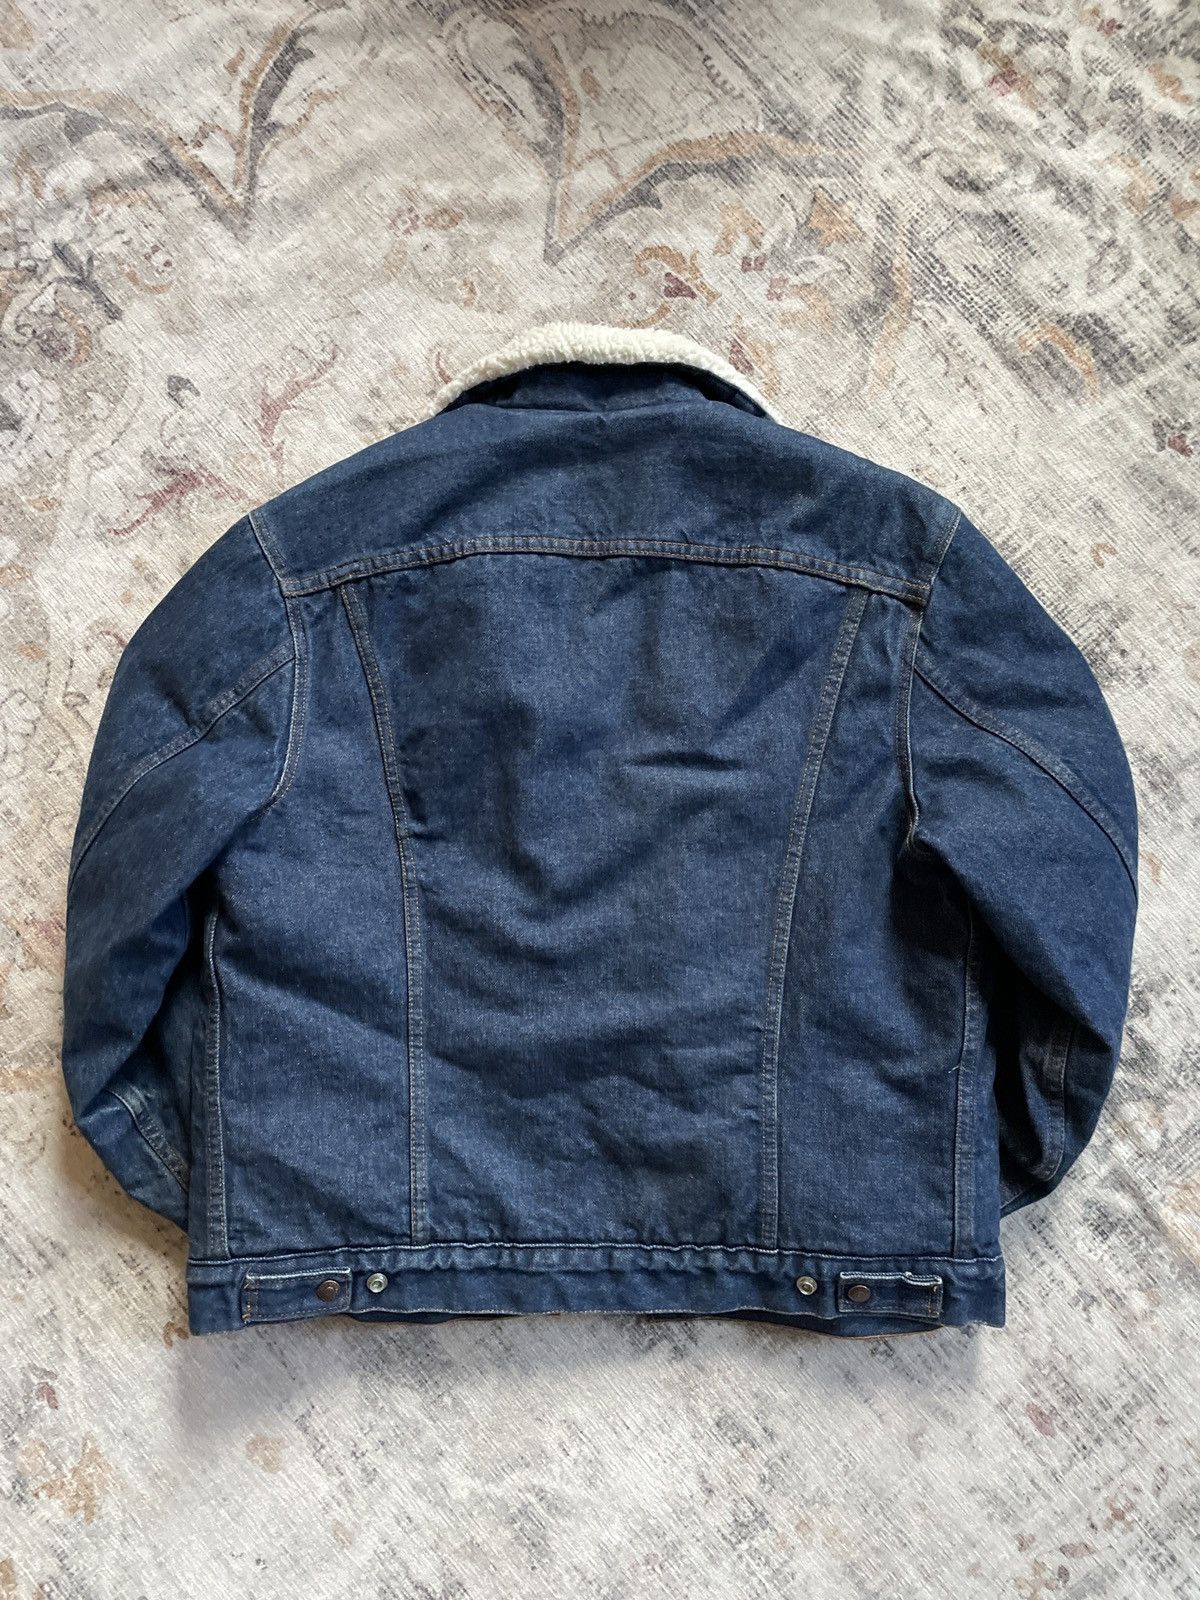 Vintage Vintage 80s Levi’s Denim Sherpa Jacket Size US L / EU 52-54 / 3 - 7 Preview